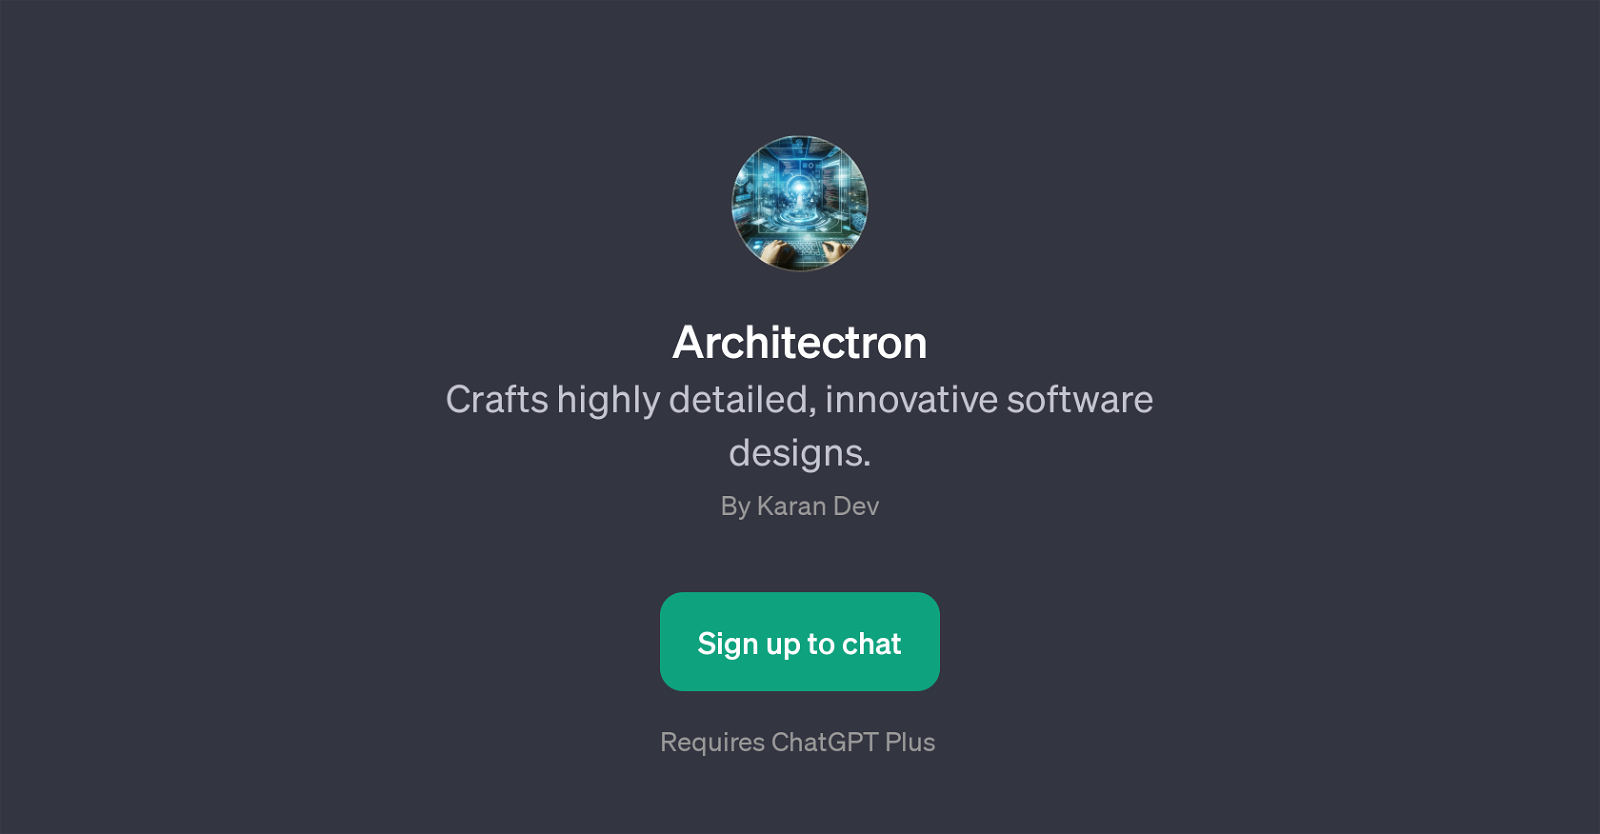 Architectron website